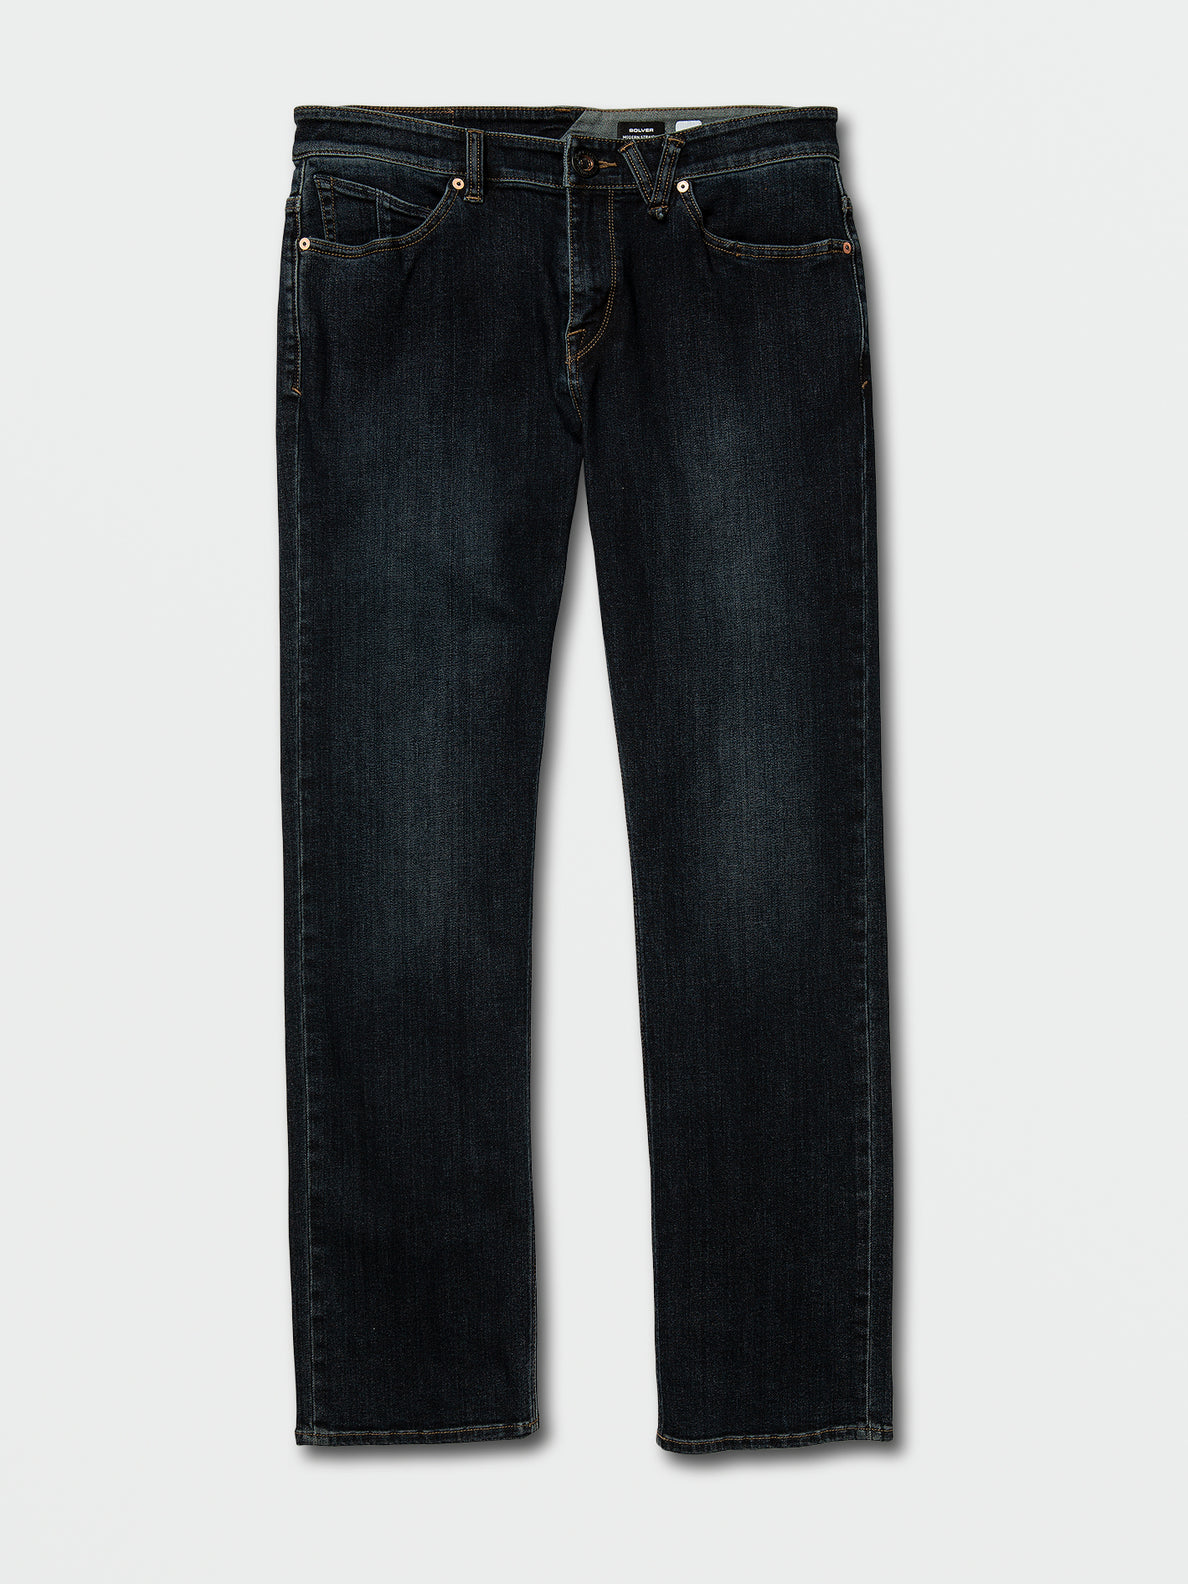 Volcom Solver Denim Pants (worker indigo vintage)